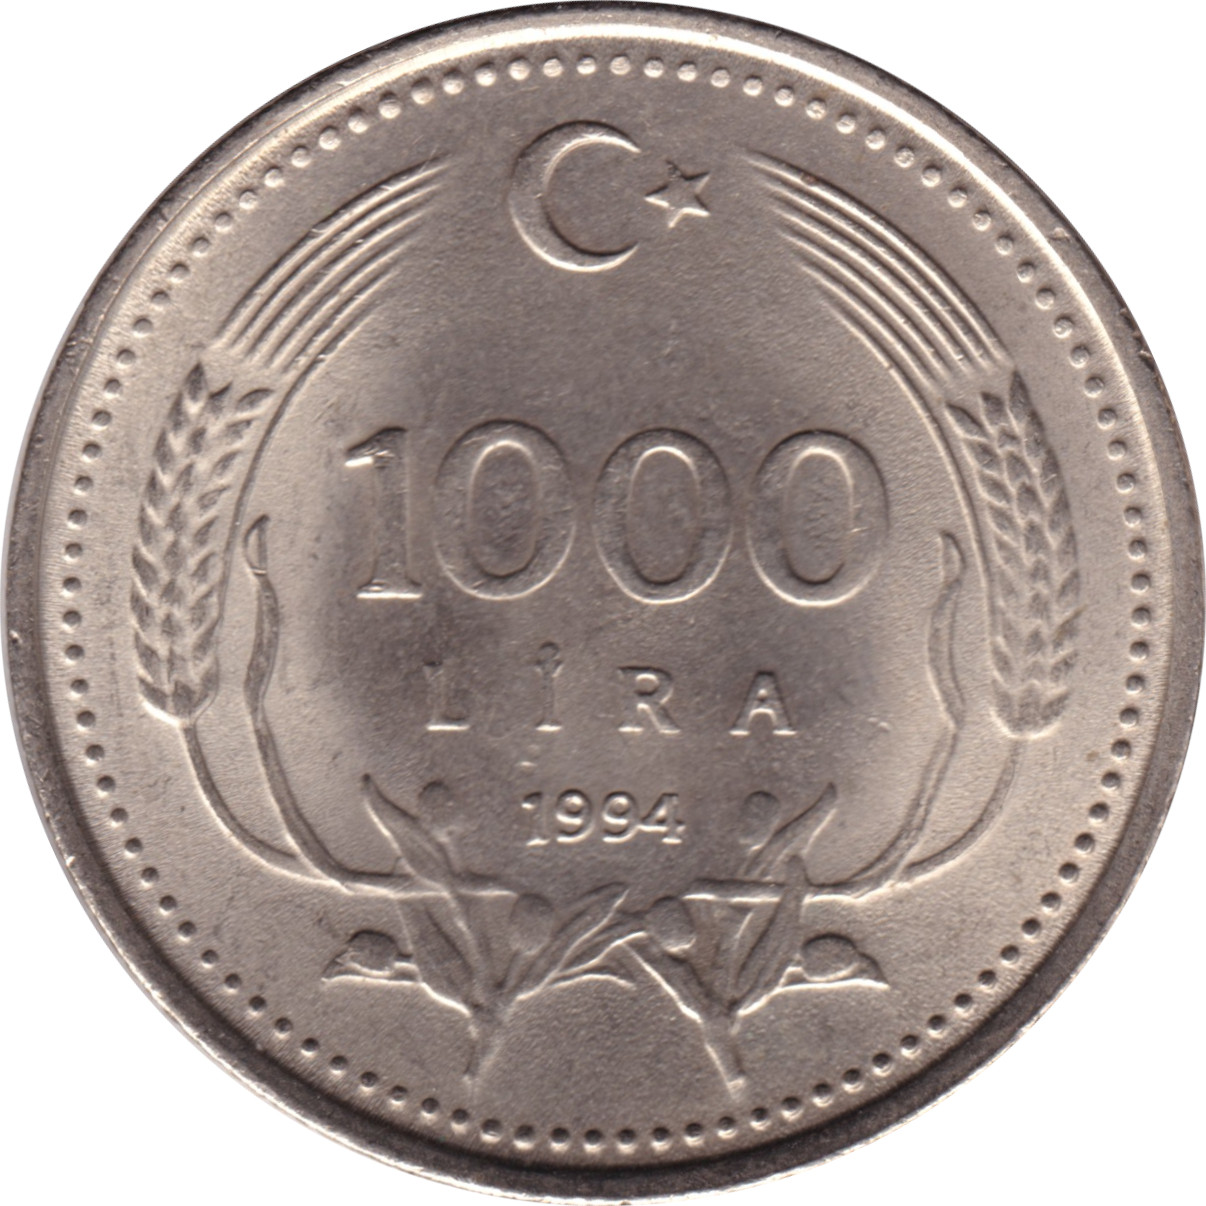 1000 lira - Moustafa Kemal - Type 1